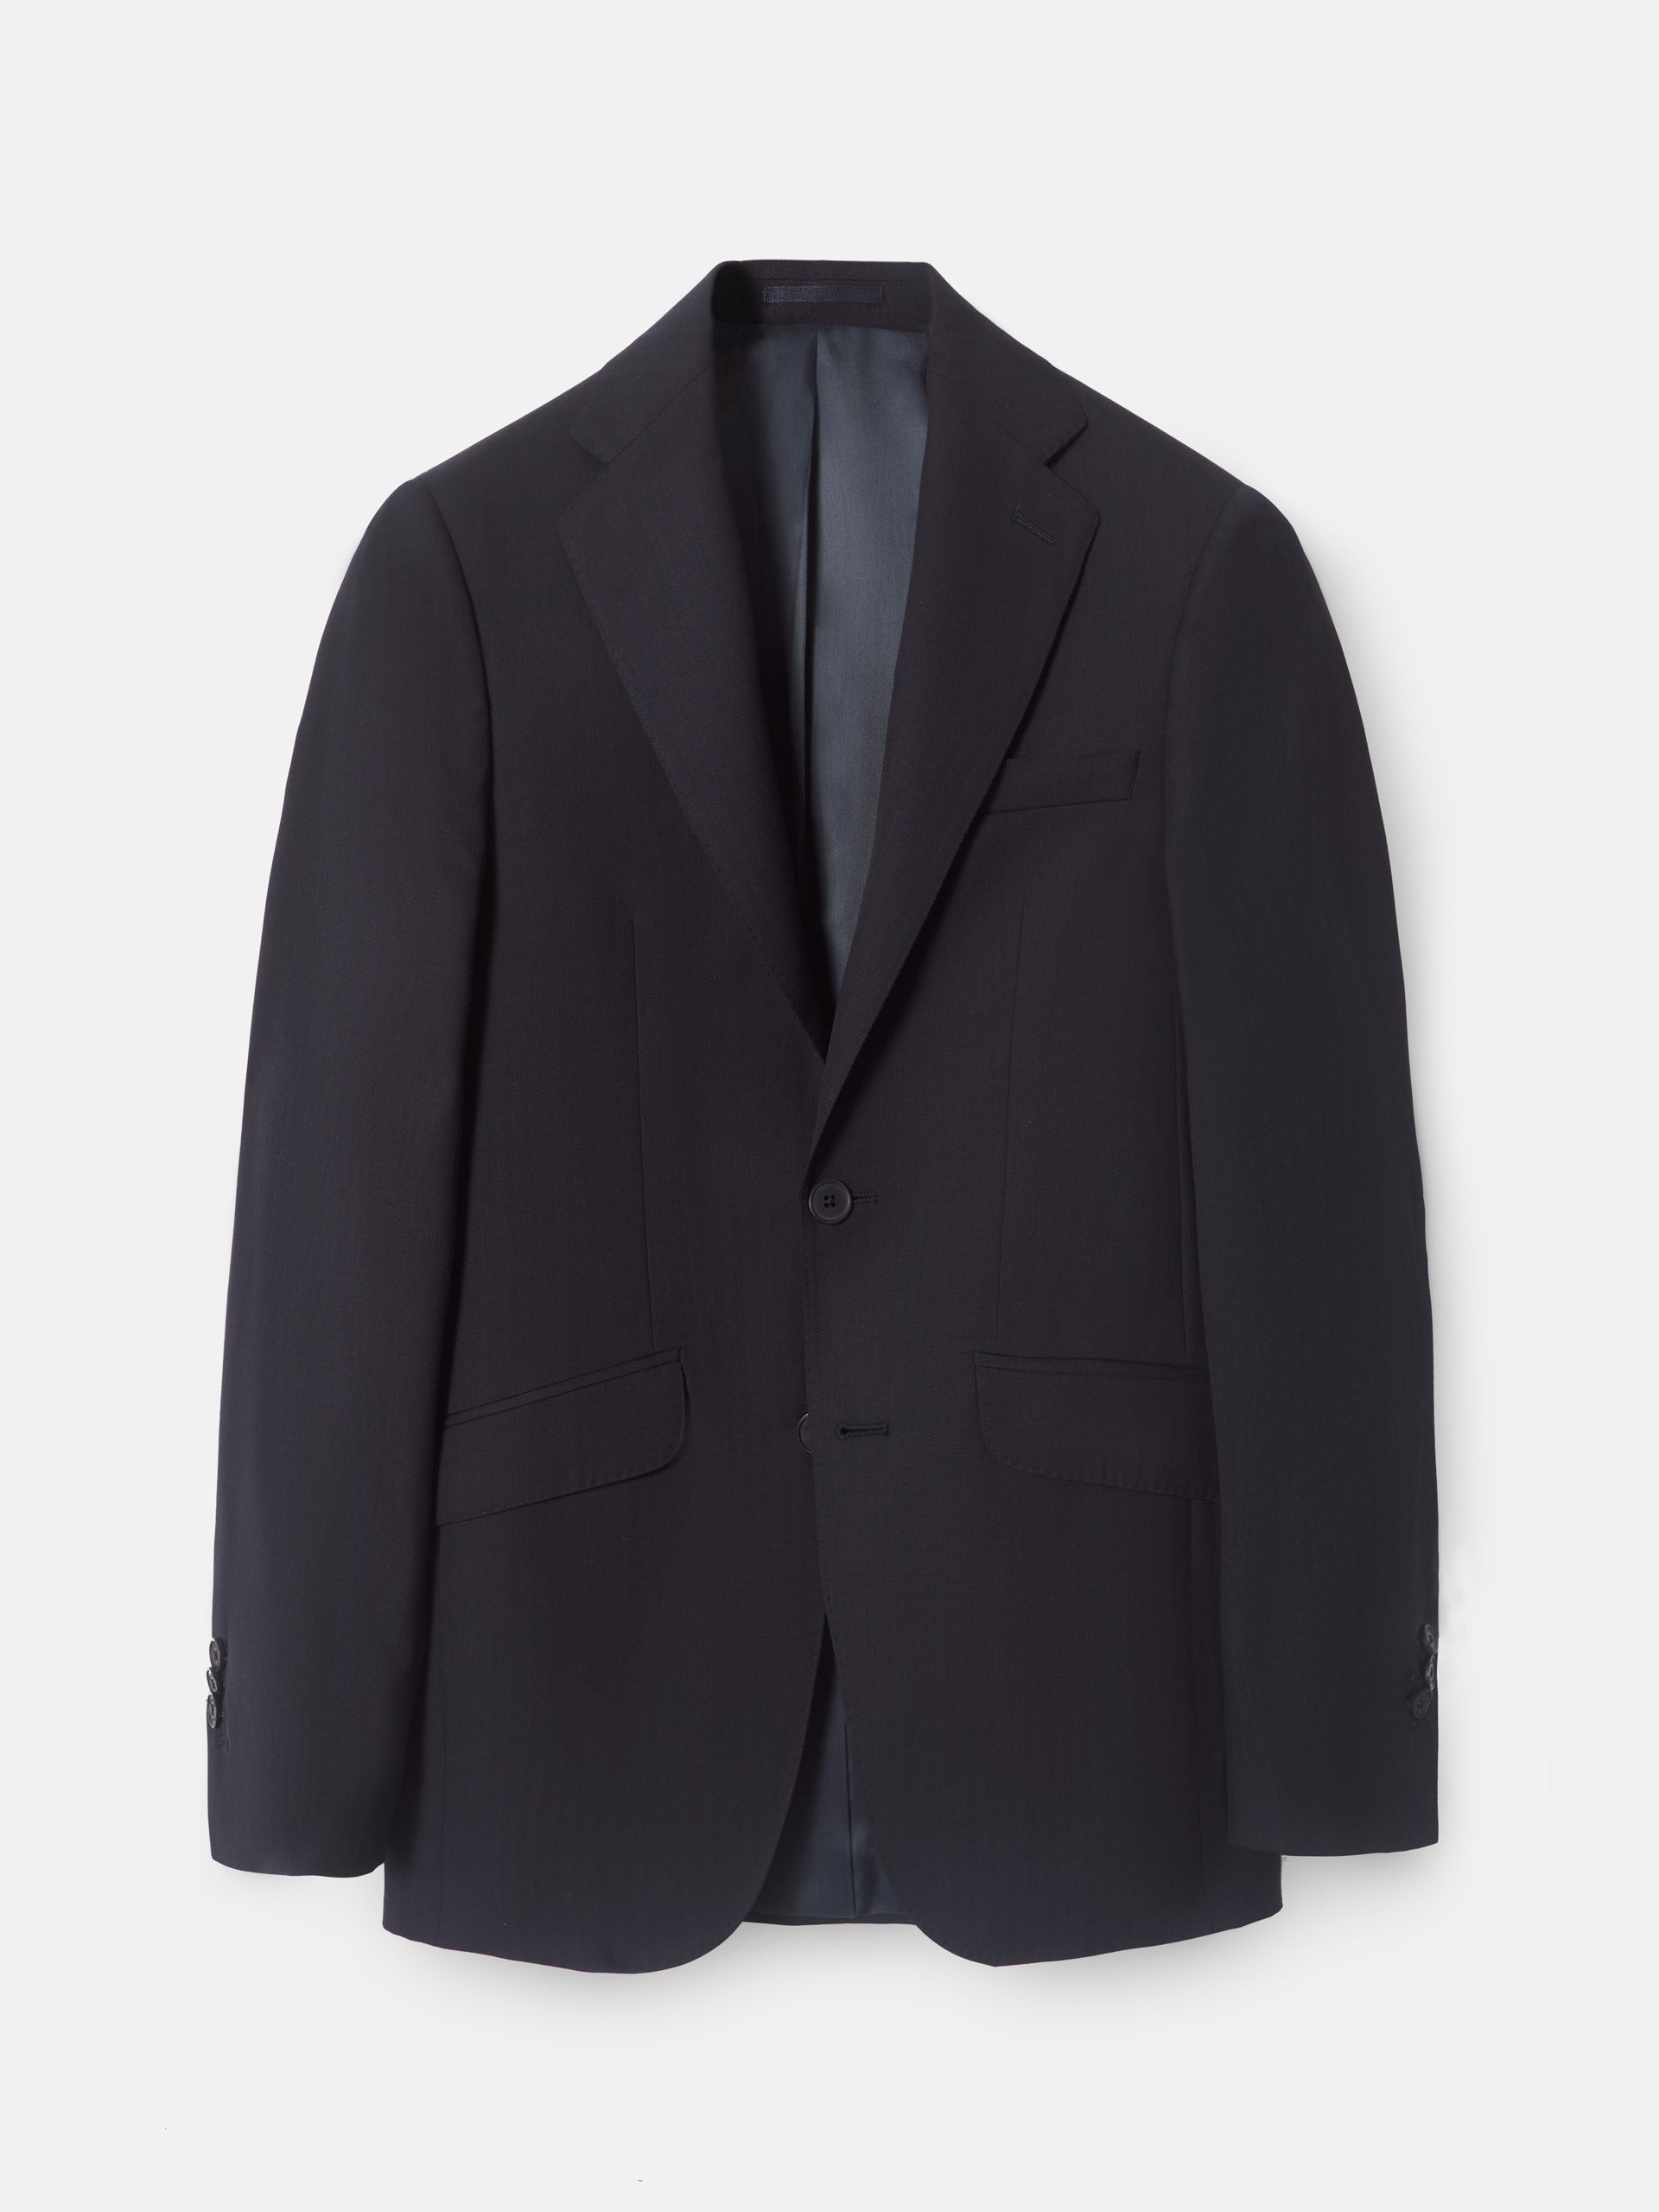 Classic navy blue herringbone suit jacket